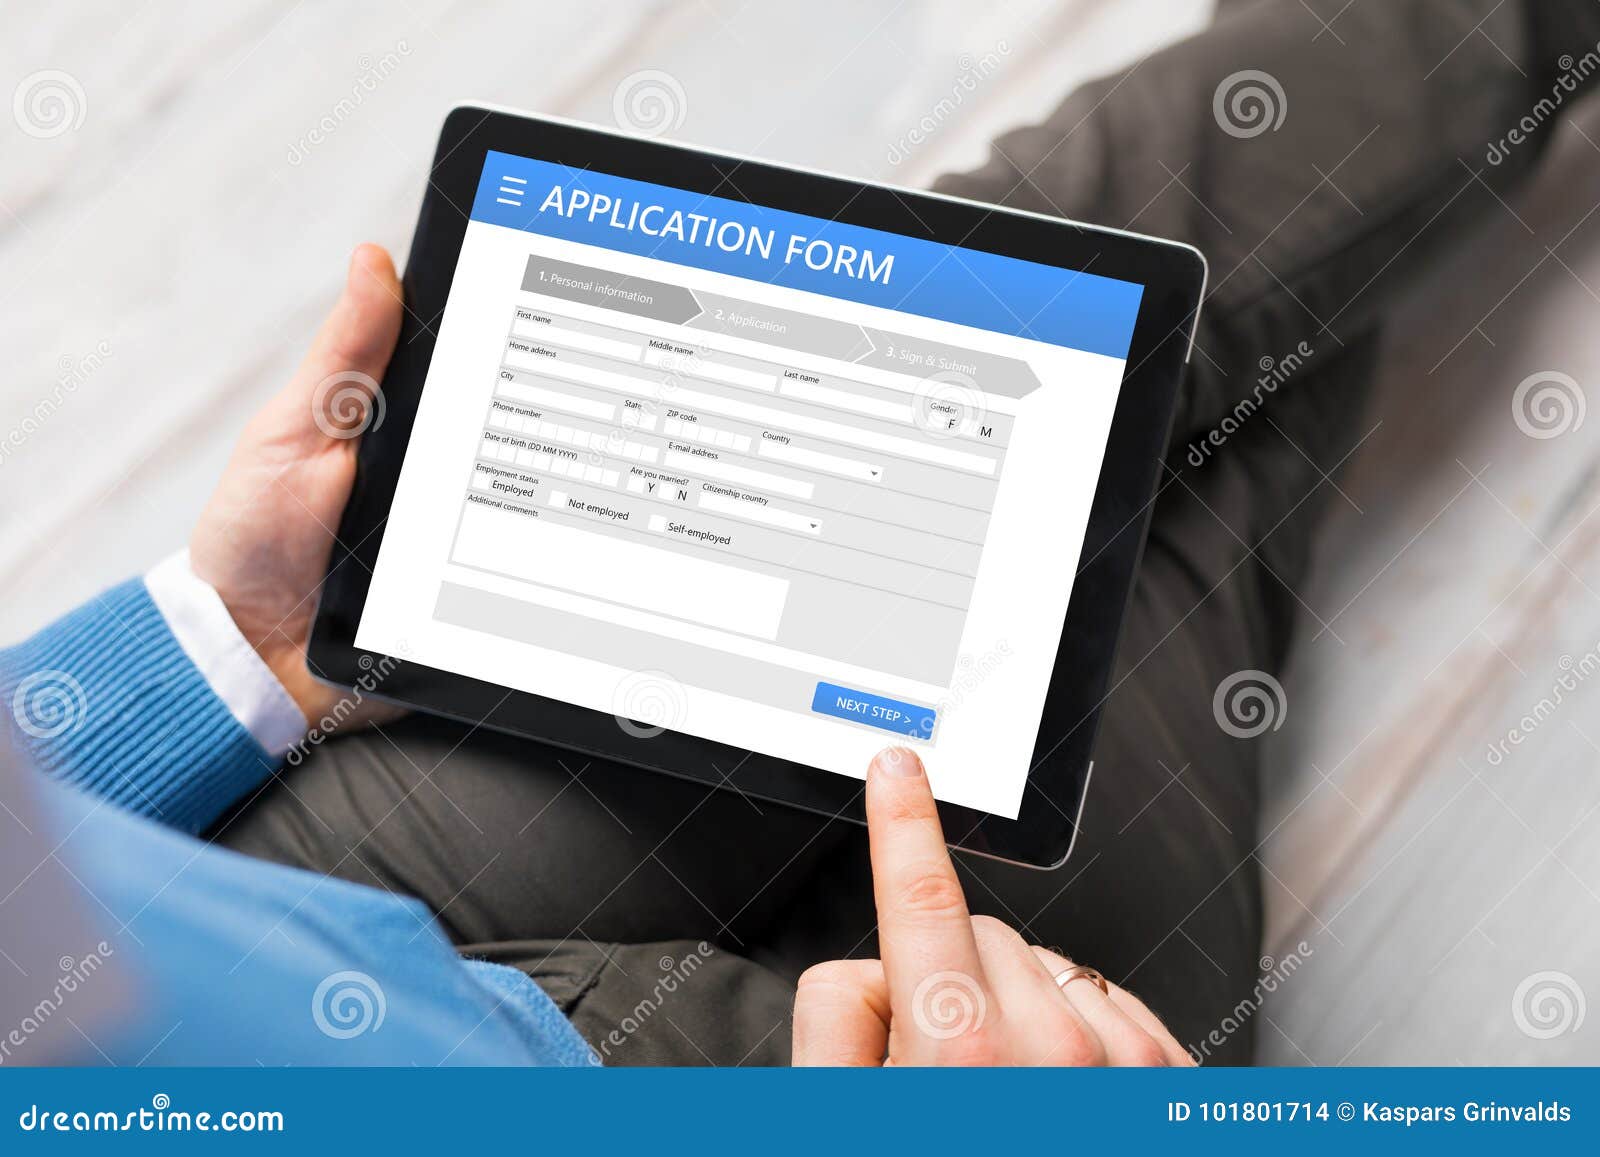 sample application form on tablet computer.